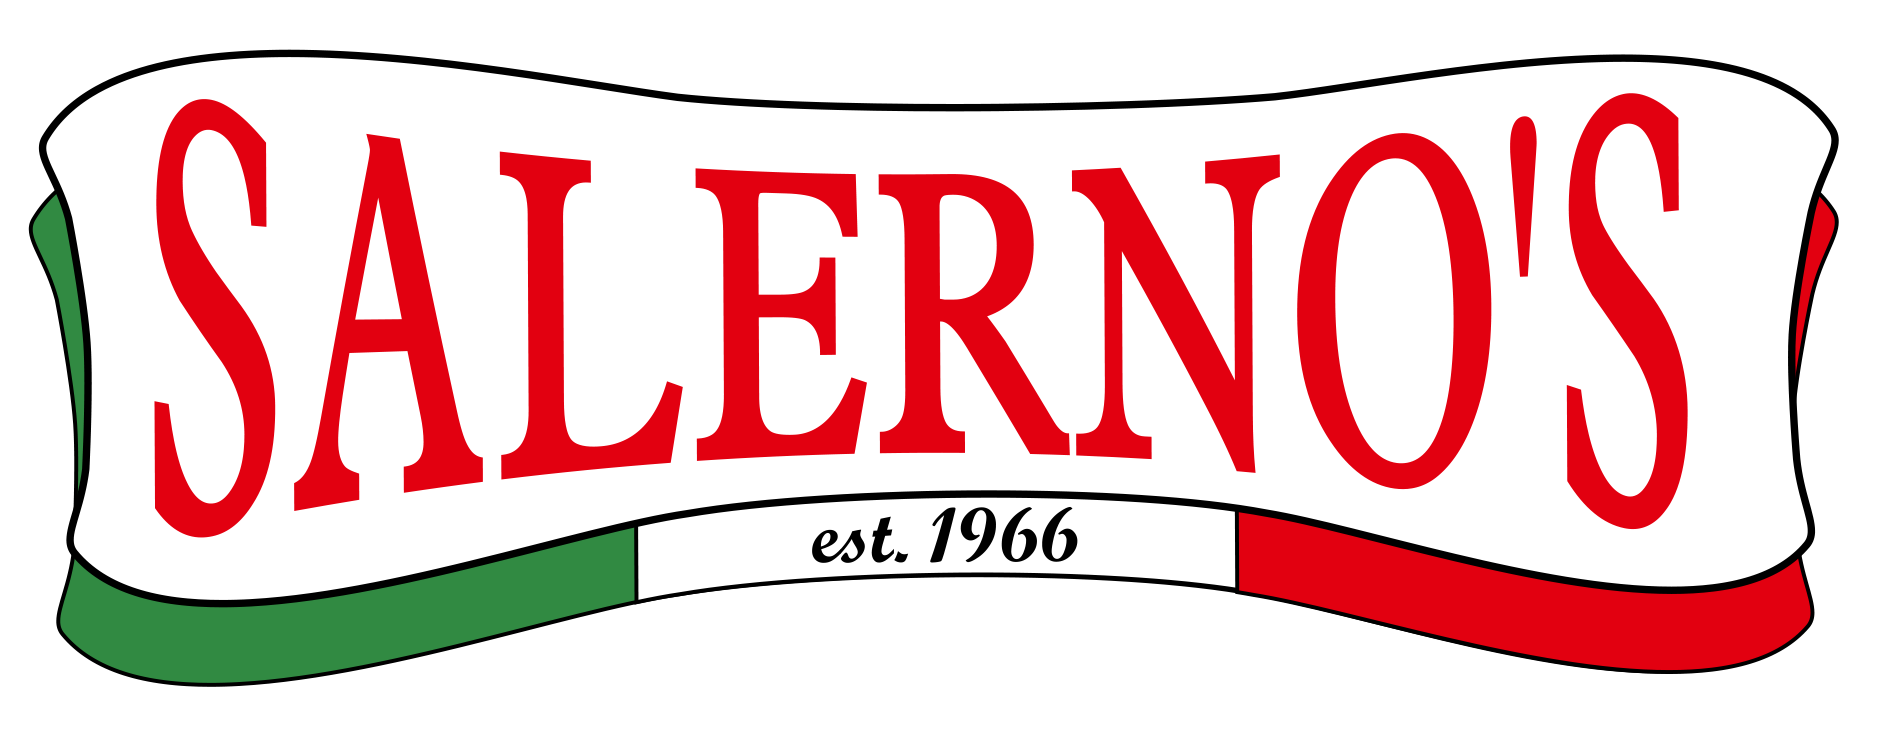 salerno's logo